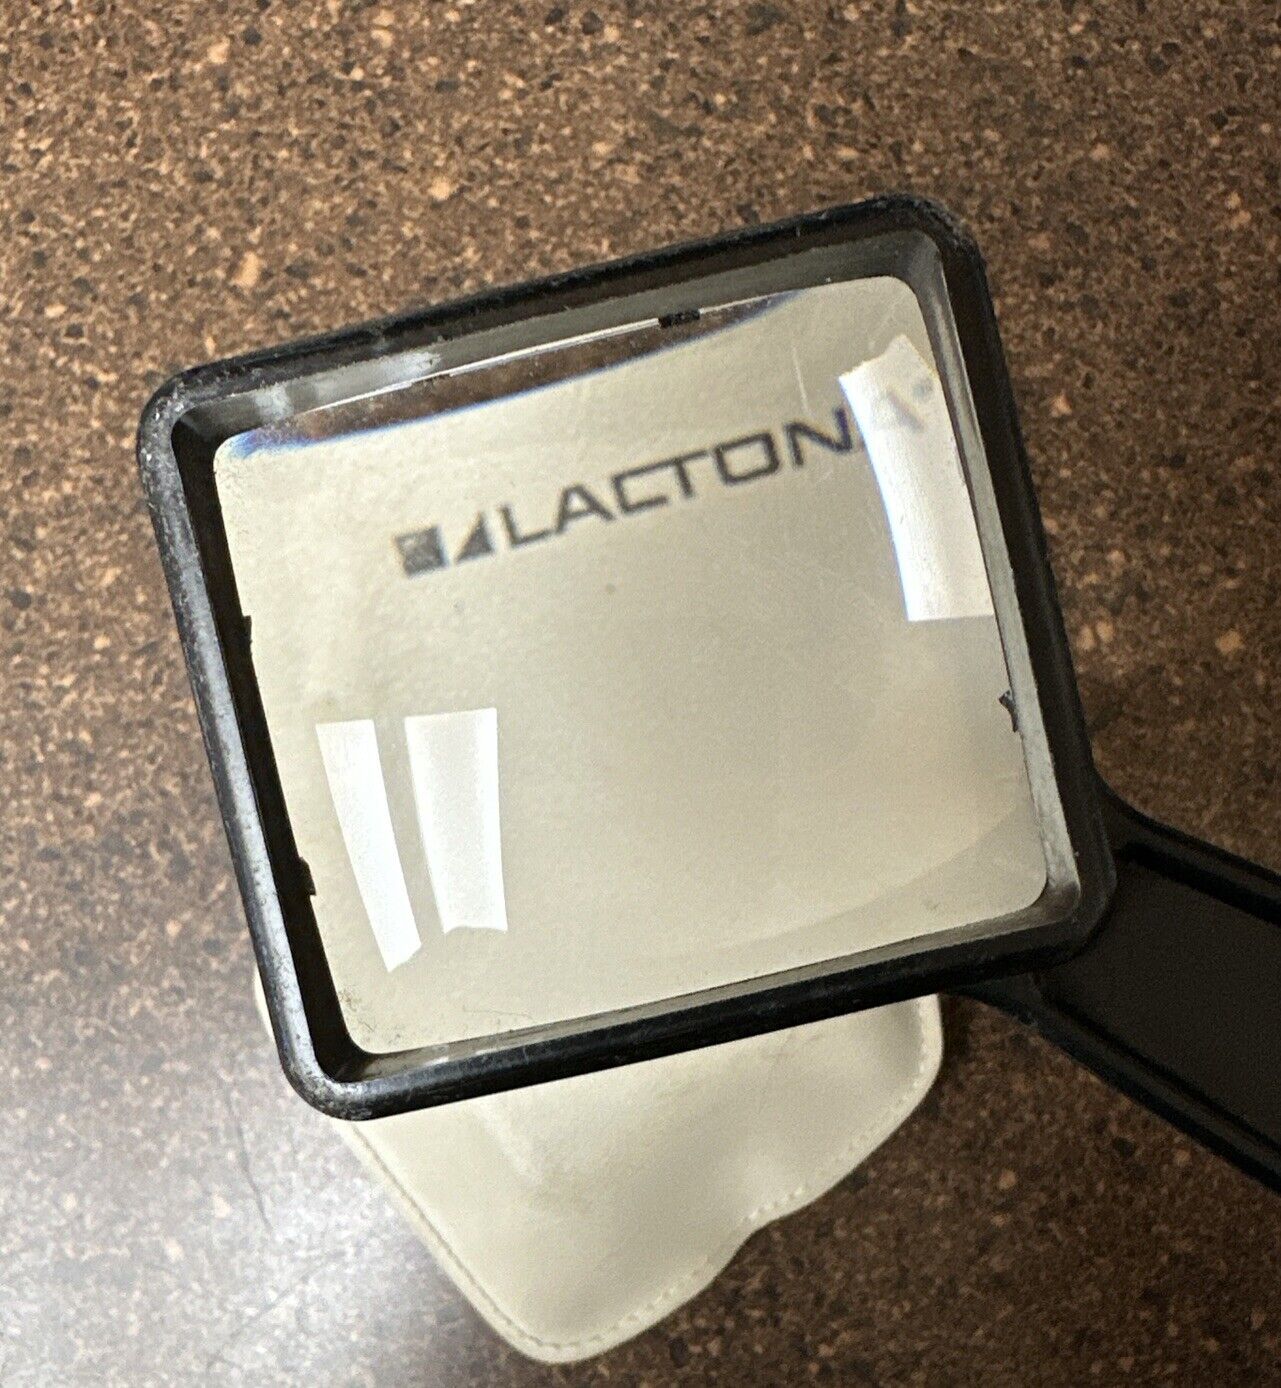 Lactona Dental Handheld Rectangular Handheld Magnifier With Case HTF Vintage